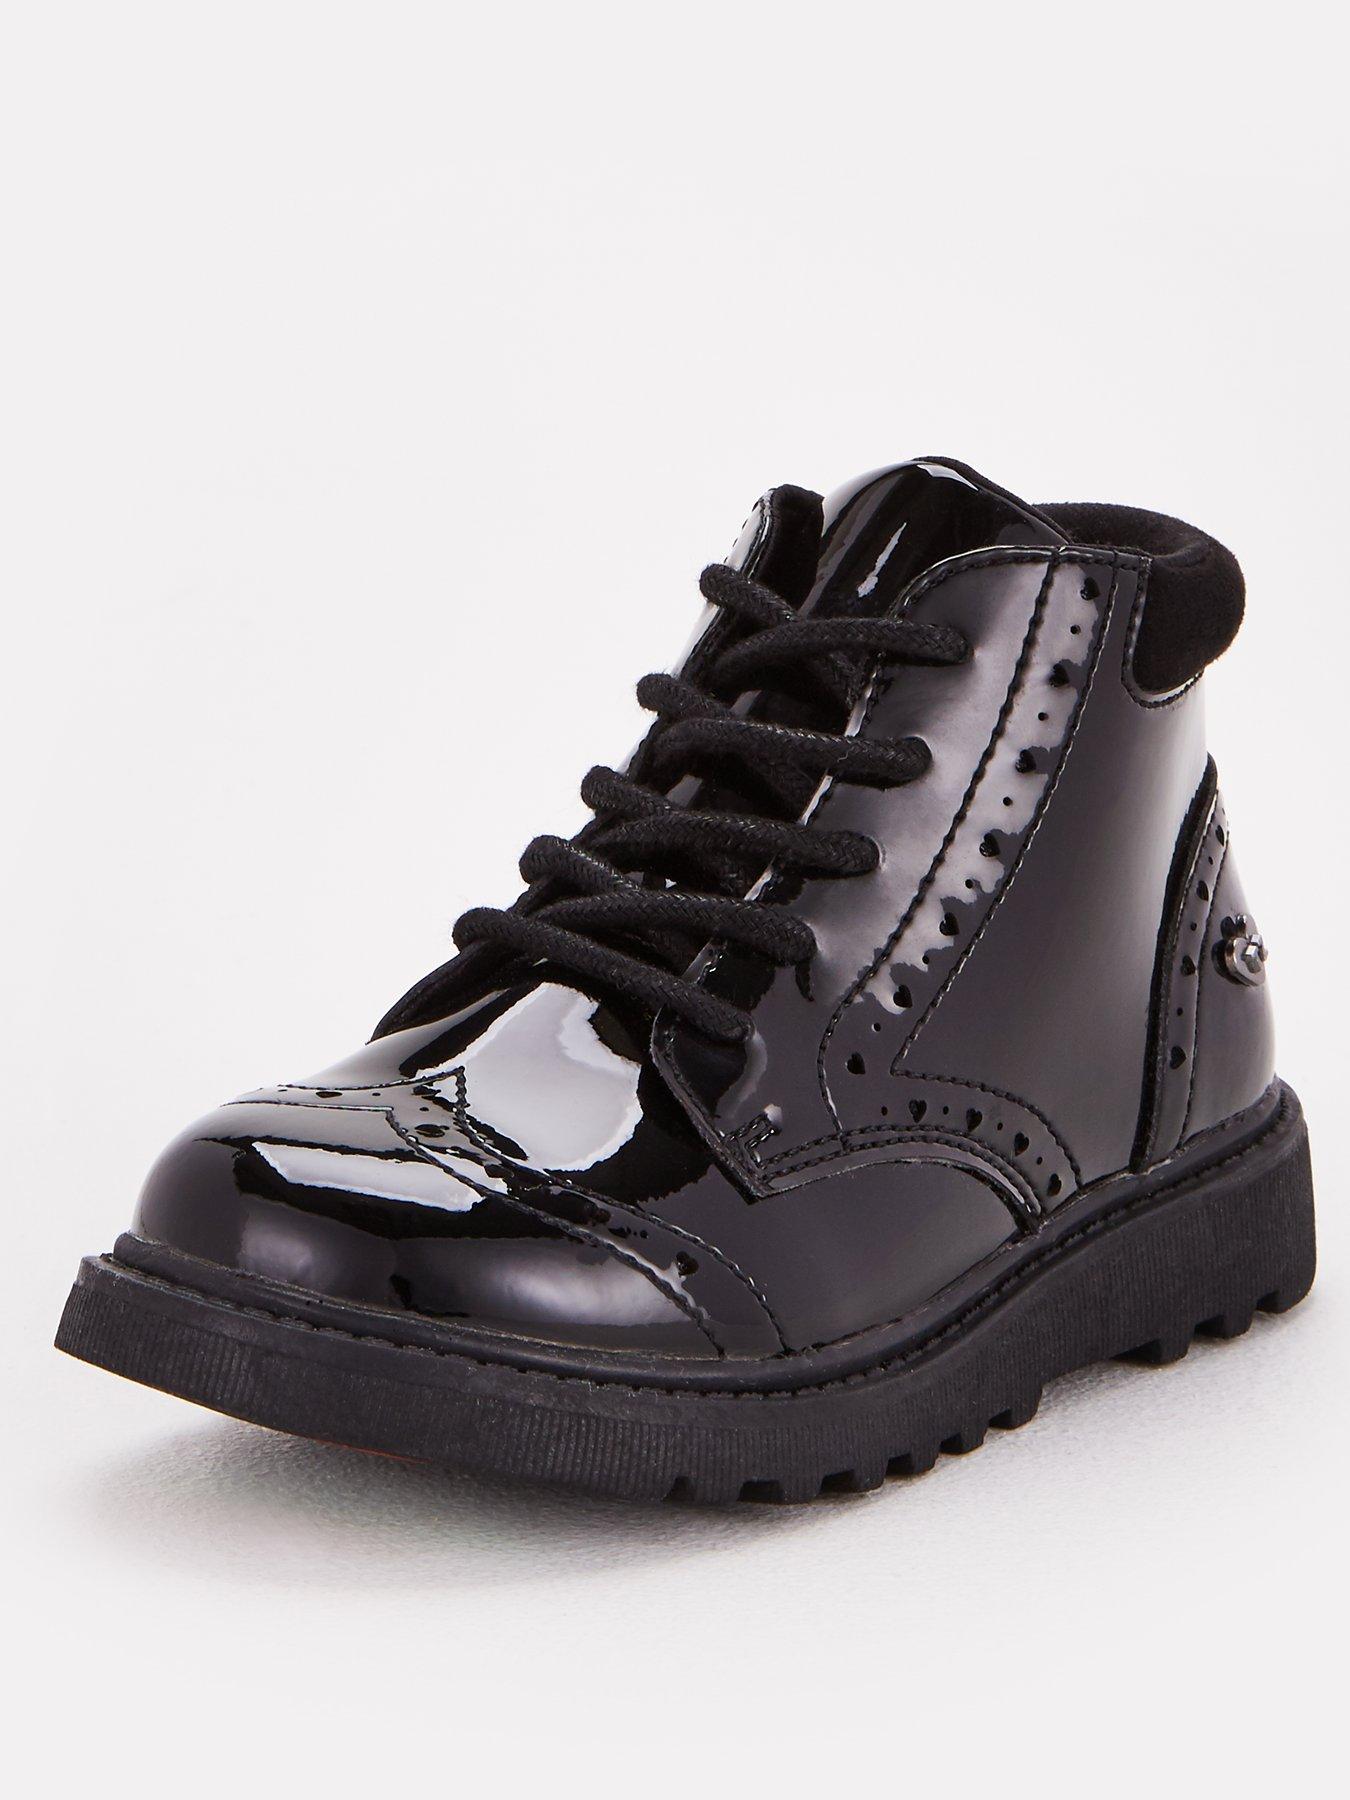 Girl | School shoes | Shoes \u0026 boots 